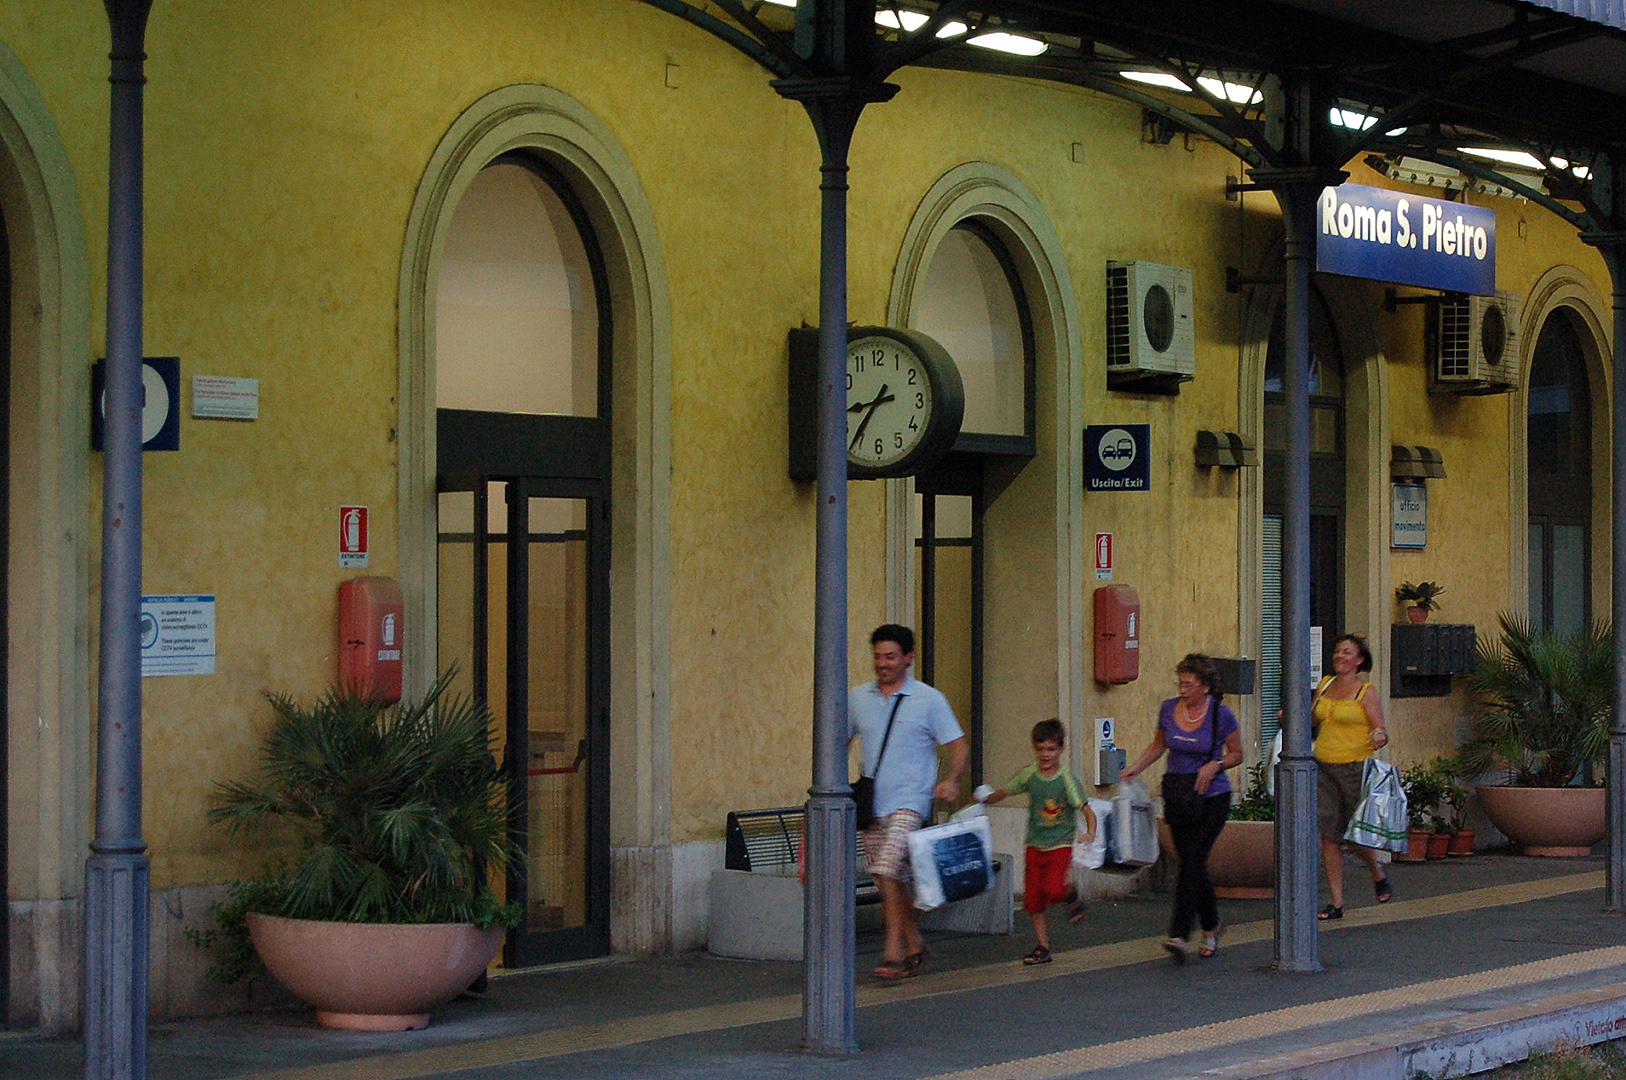 Station Rome San Pietro, Rome, Italië, Roma San Pietro railway station, Rome, Italy